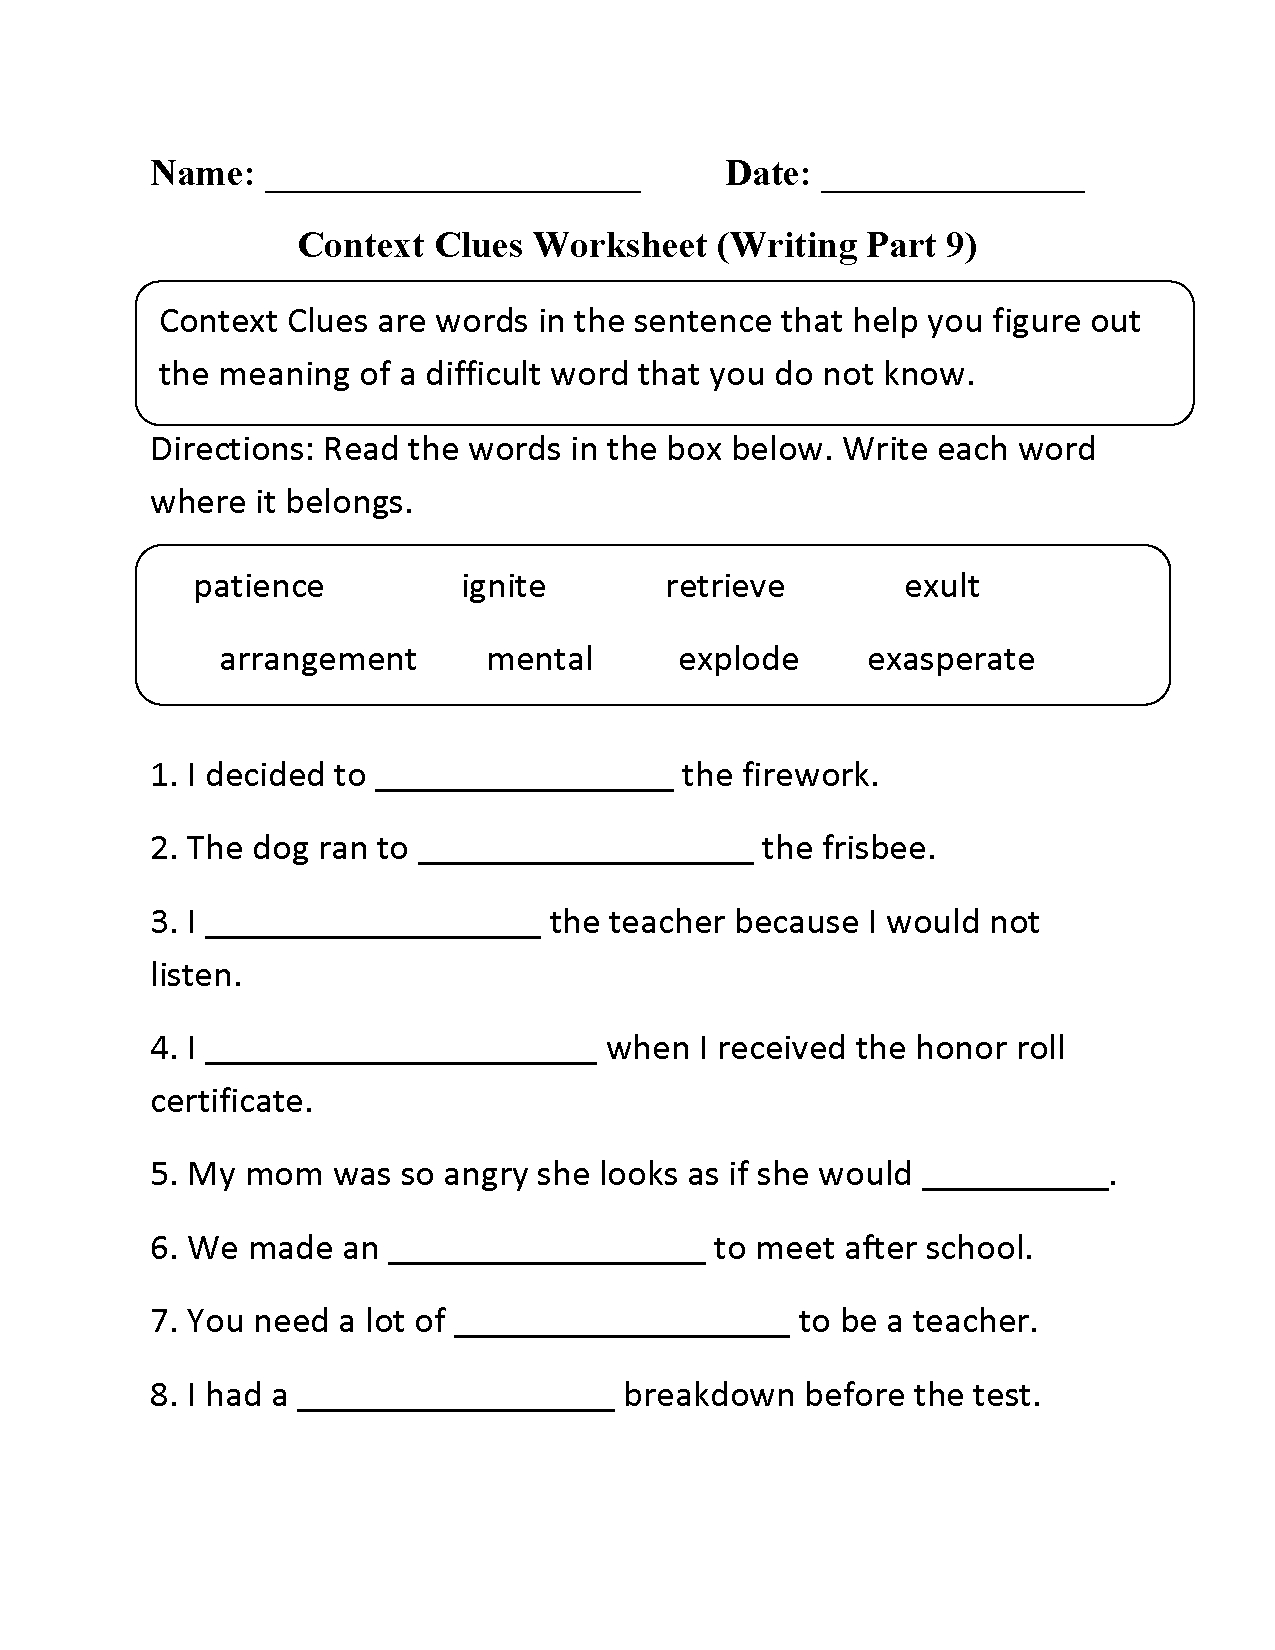 Englishlinx  Context Clues Worksheets